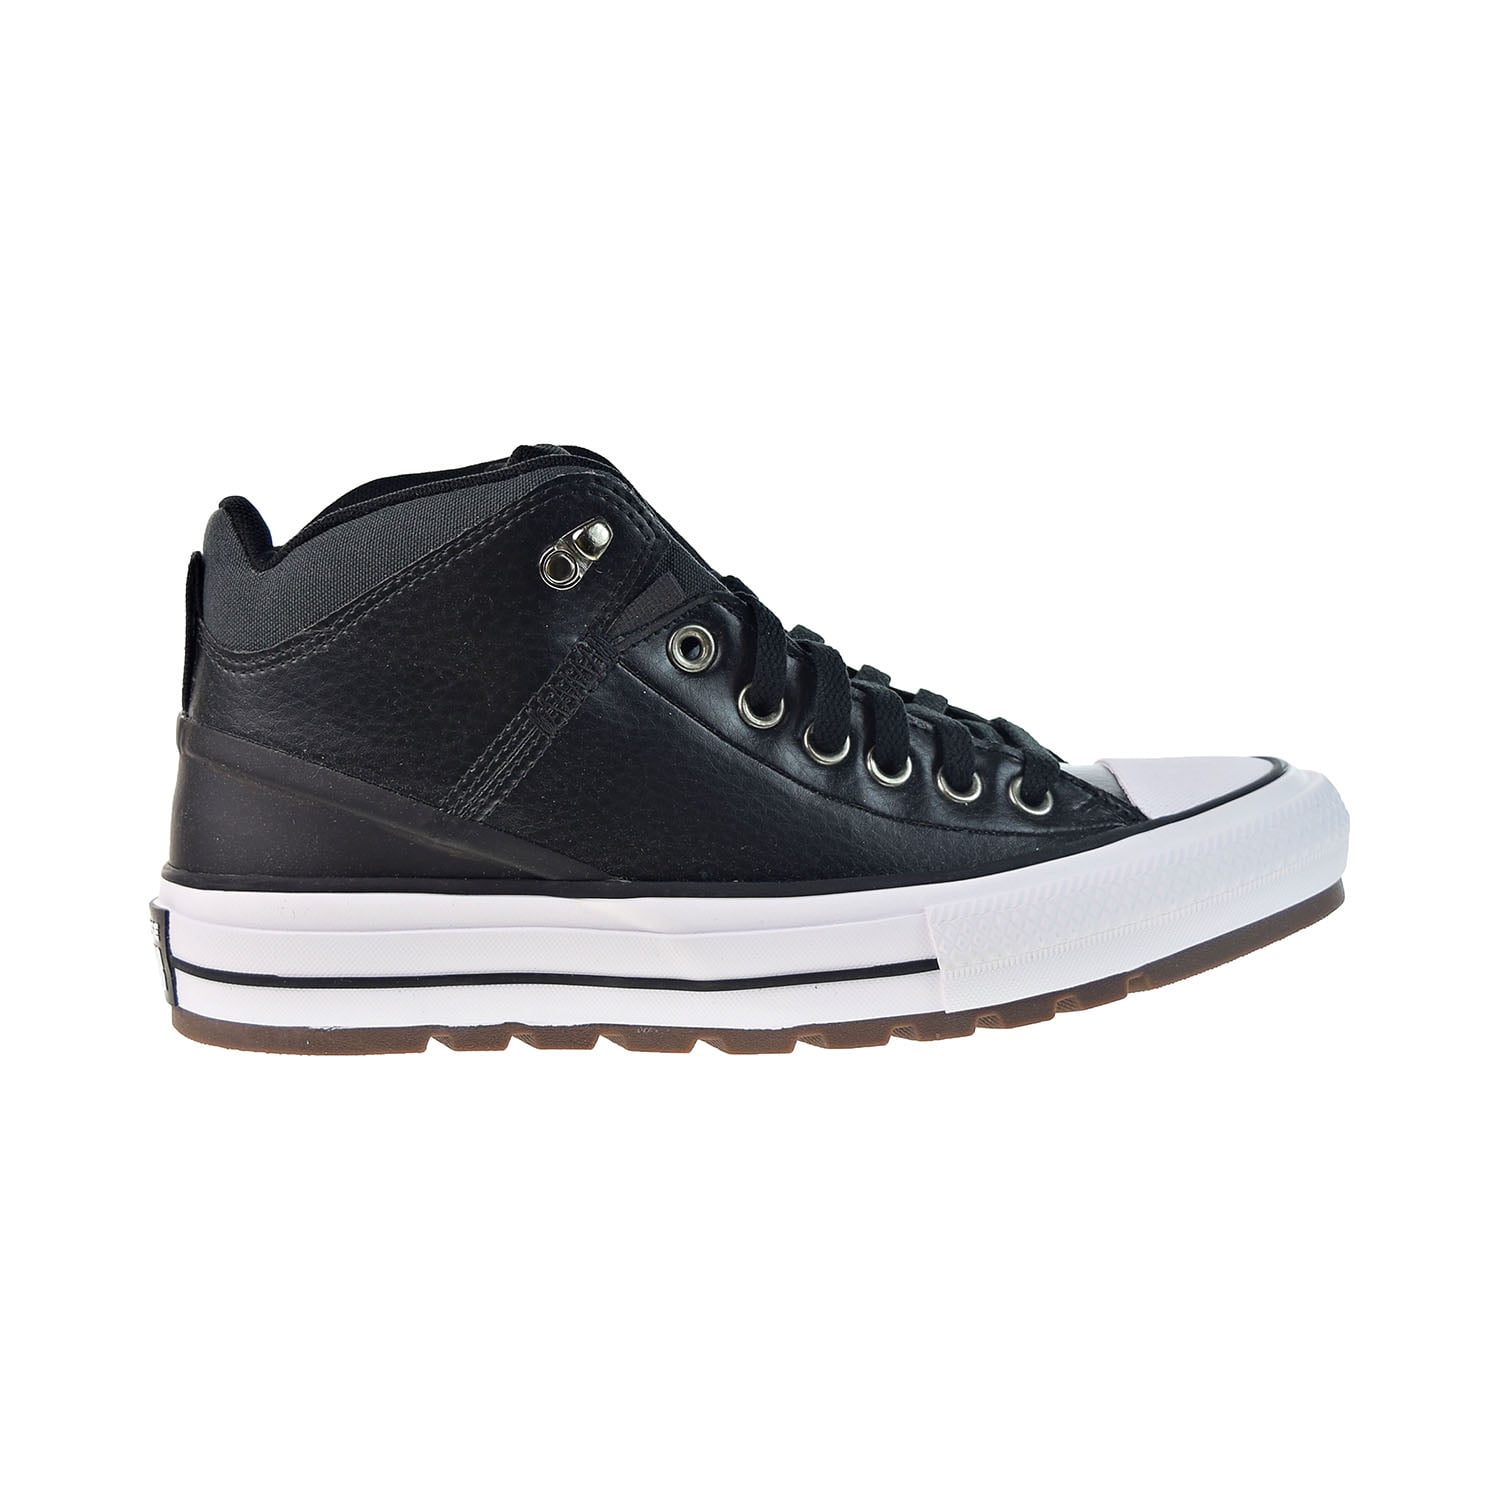 Converse Chuck Taylor Star Street Boot Hi Top Men's Shoes Black-White 168865c -